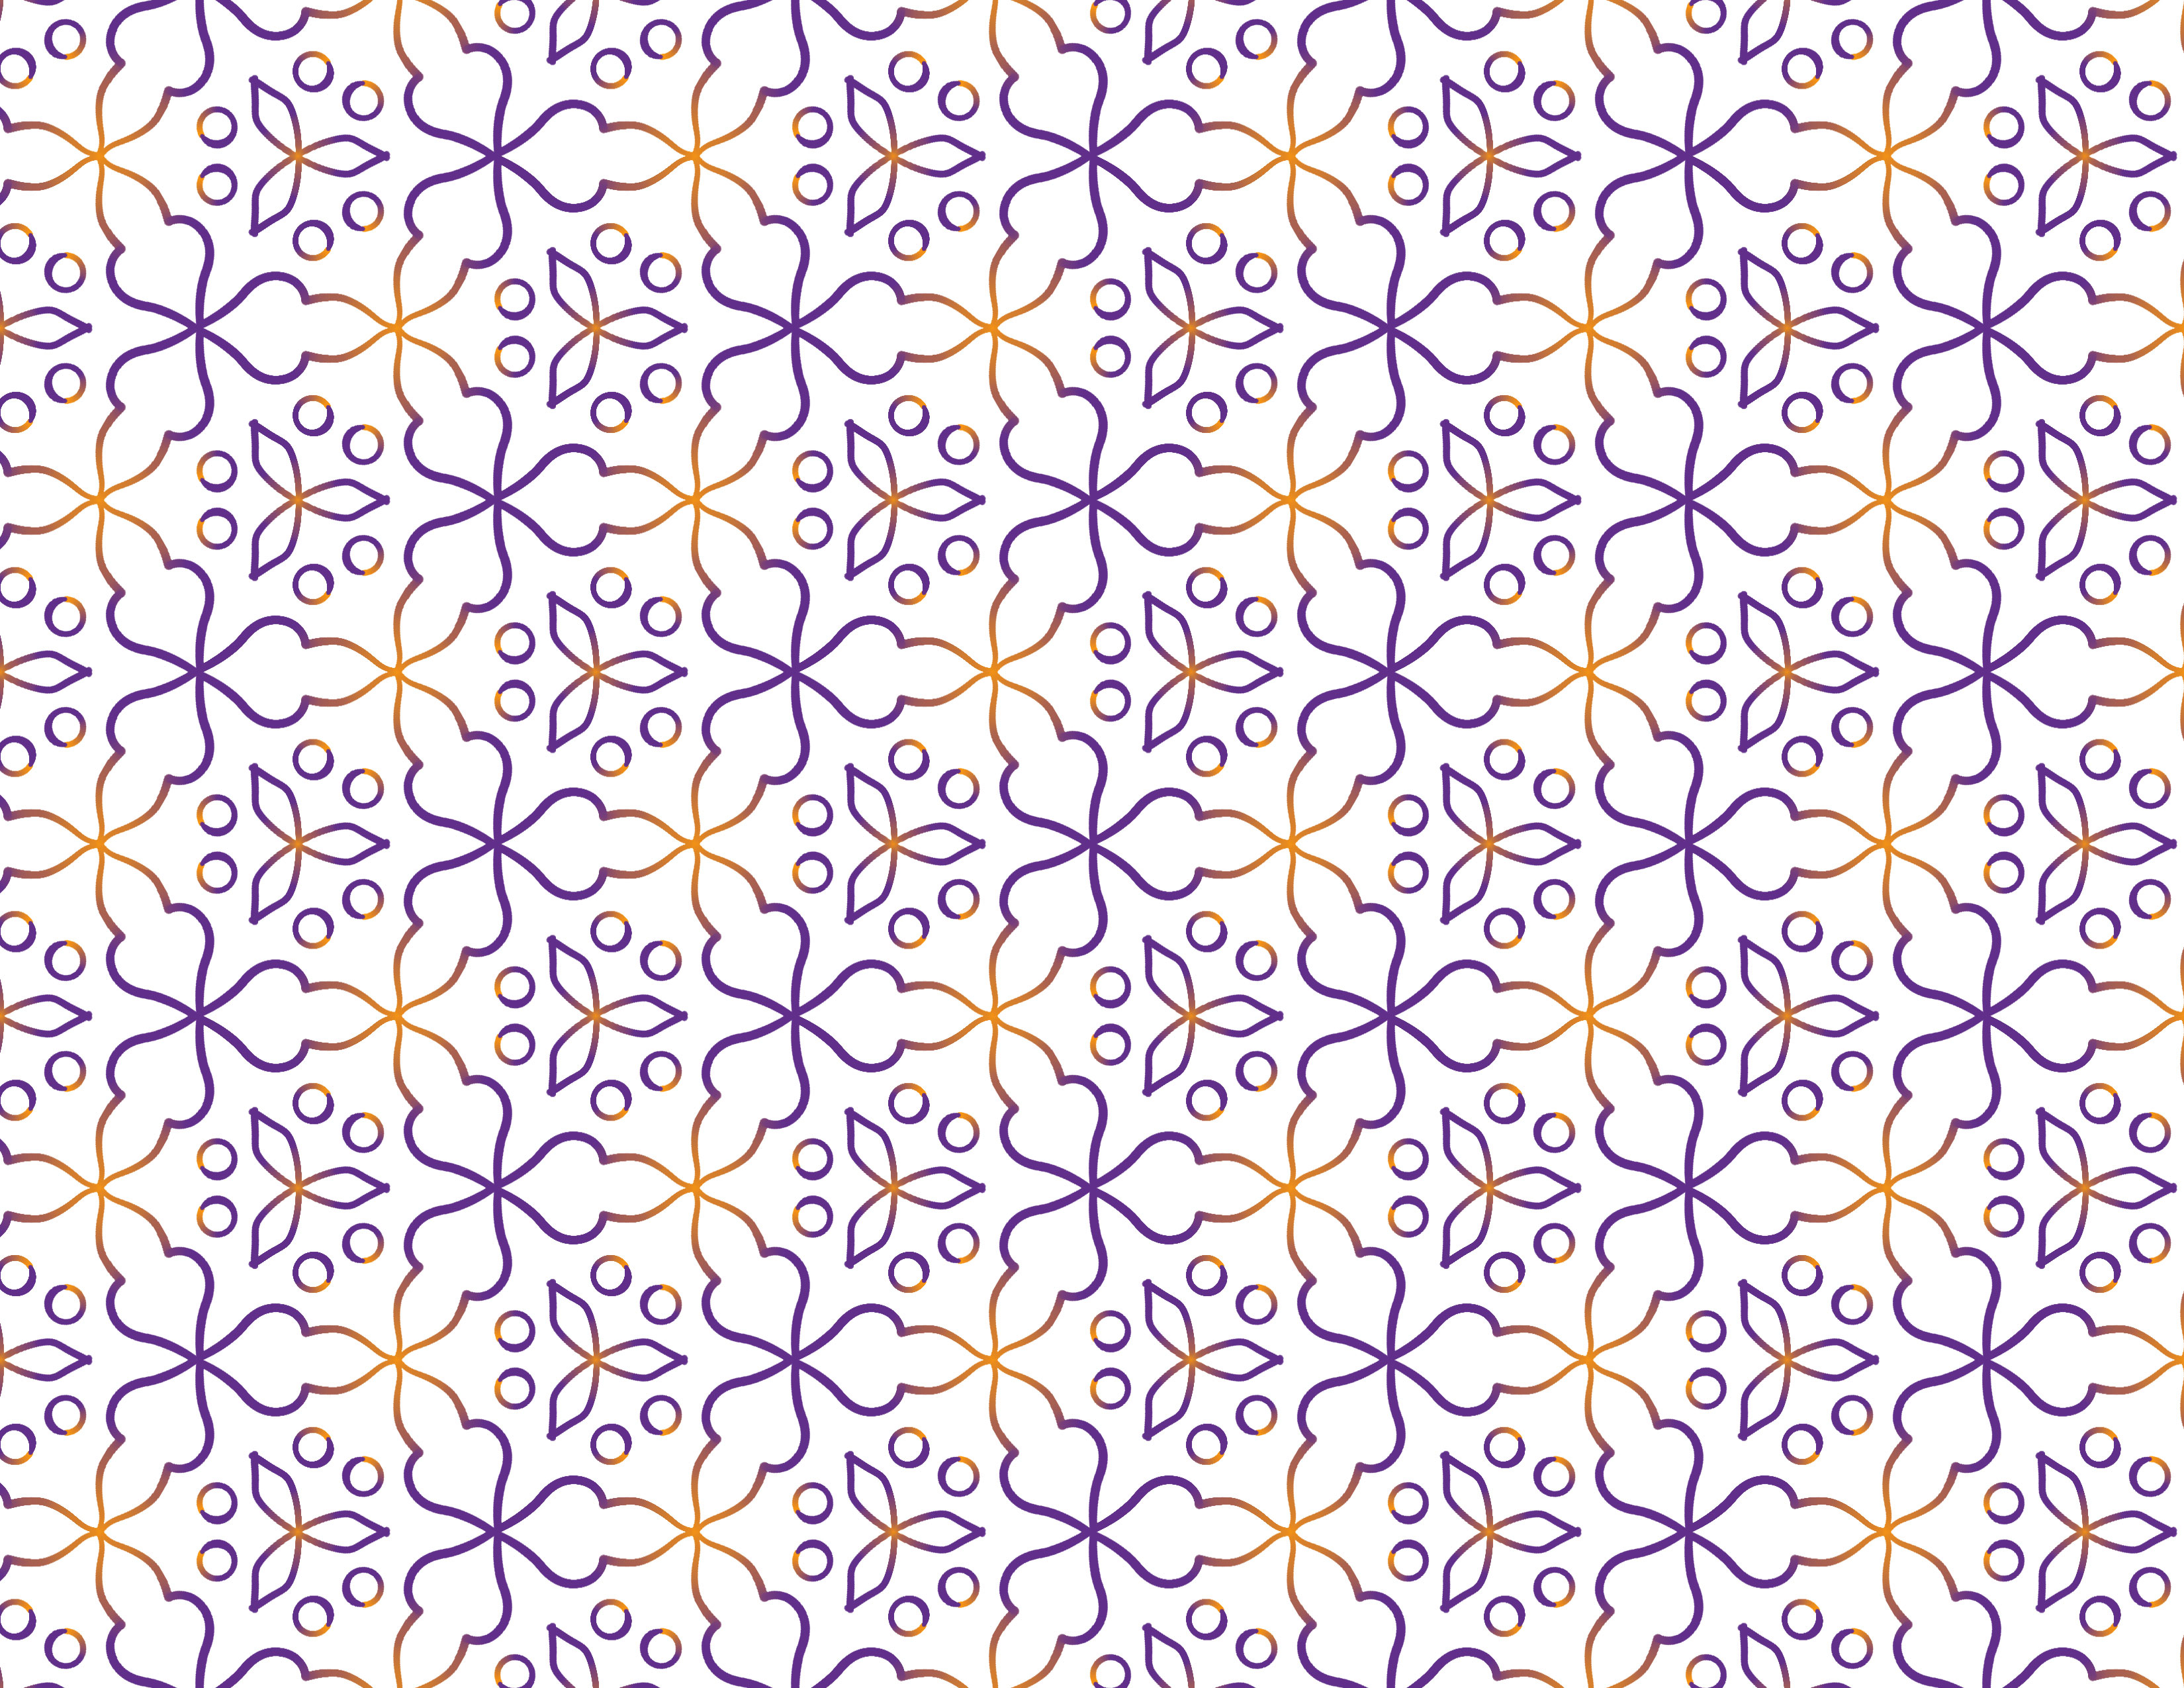 gradiant pattern artwork background free download